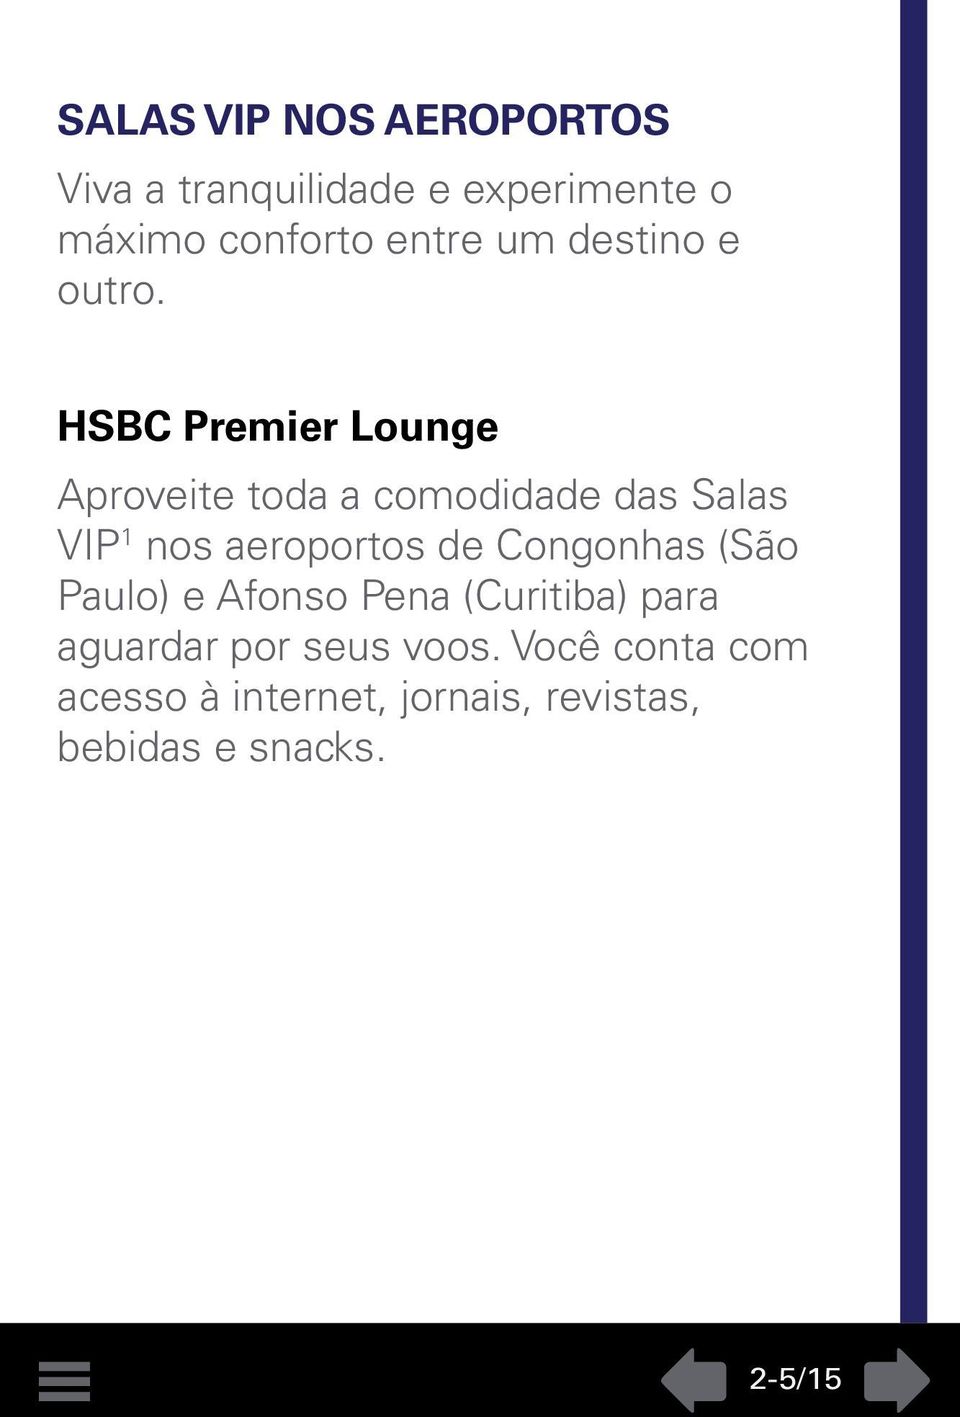 HSBC Premier Lounge Aproveite toda a comodidade das Salas VIP 1 nos aeroportos de